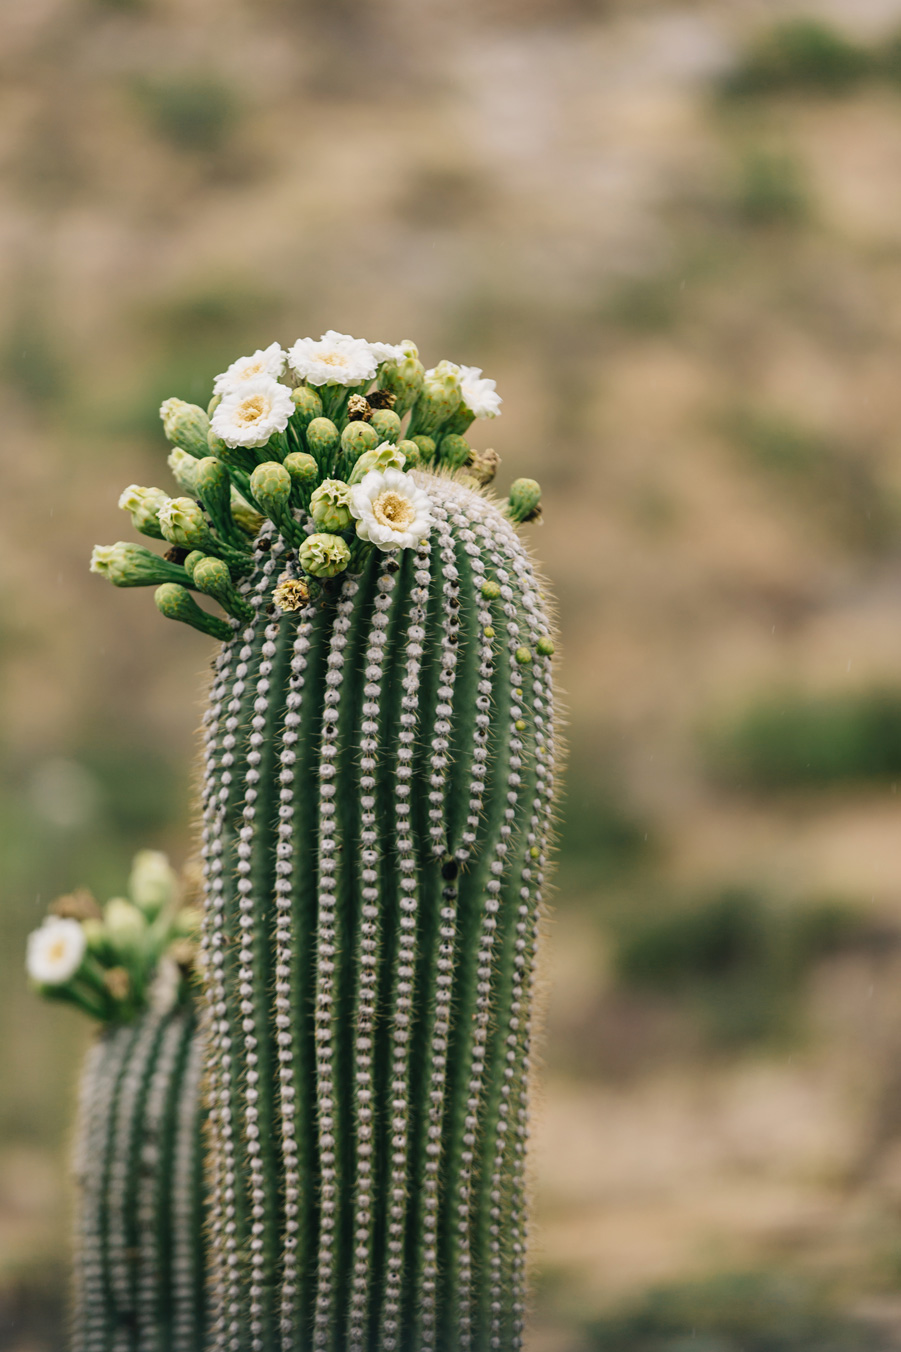 CindyGiovagnoli_Saguaro_National_Park_Tucson_Arizona_flowers_rain_spring_desert-004.jpg